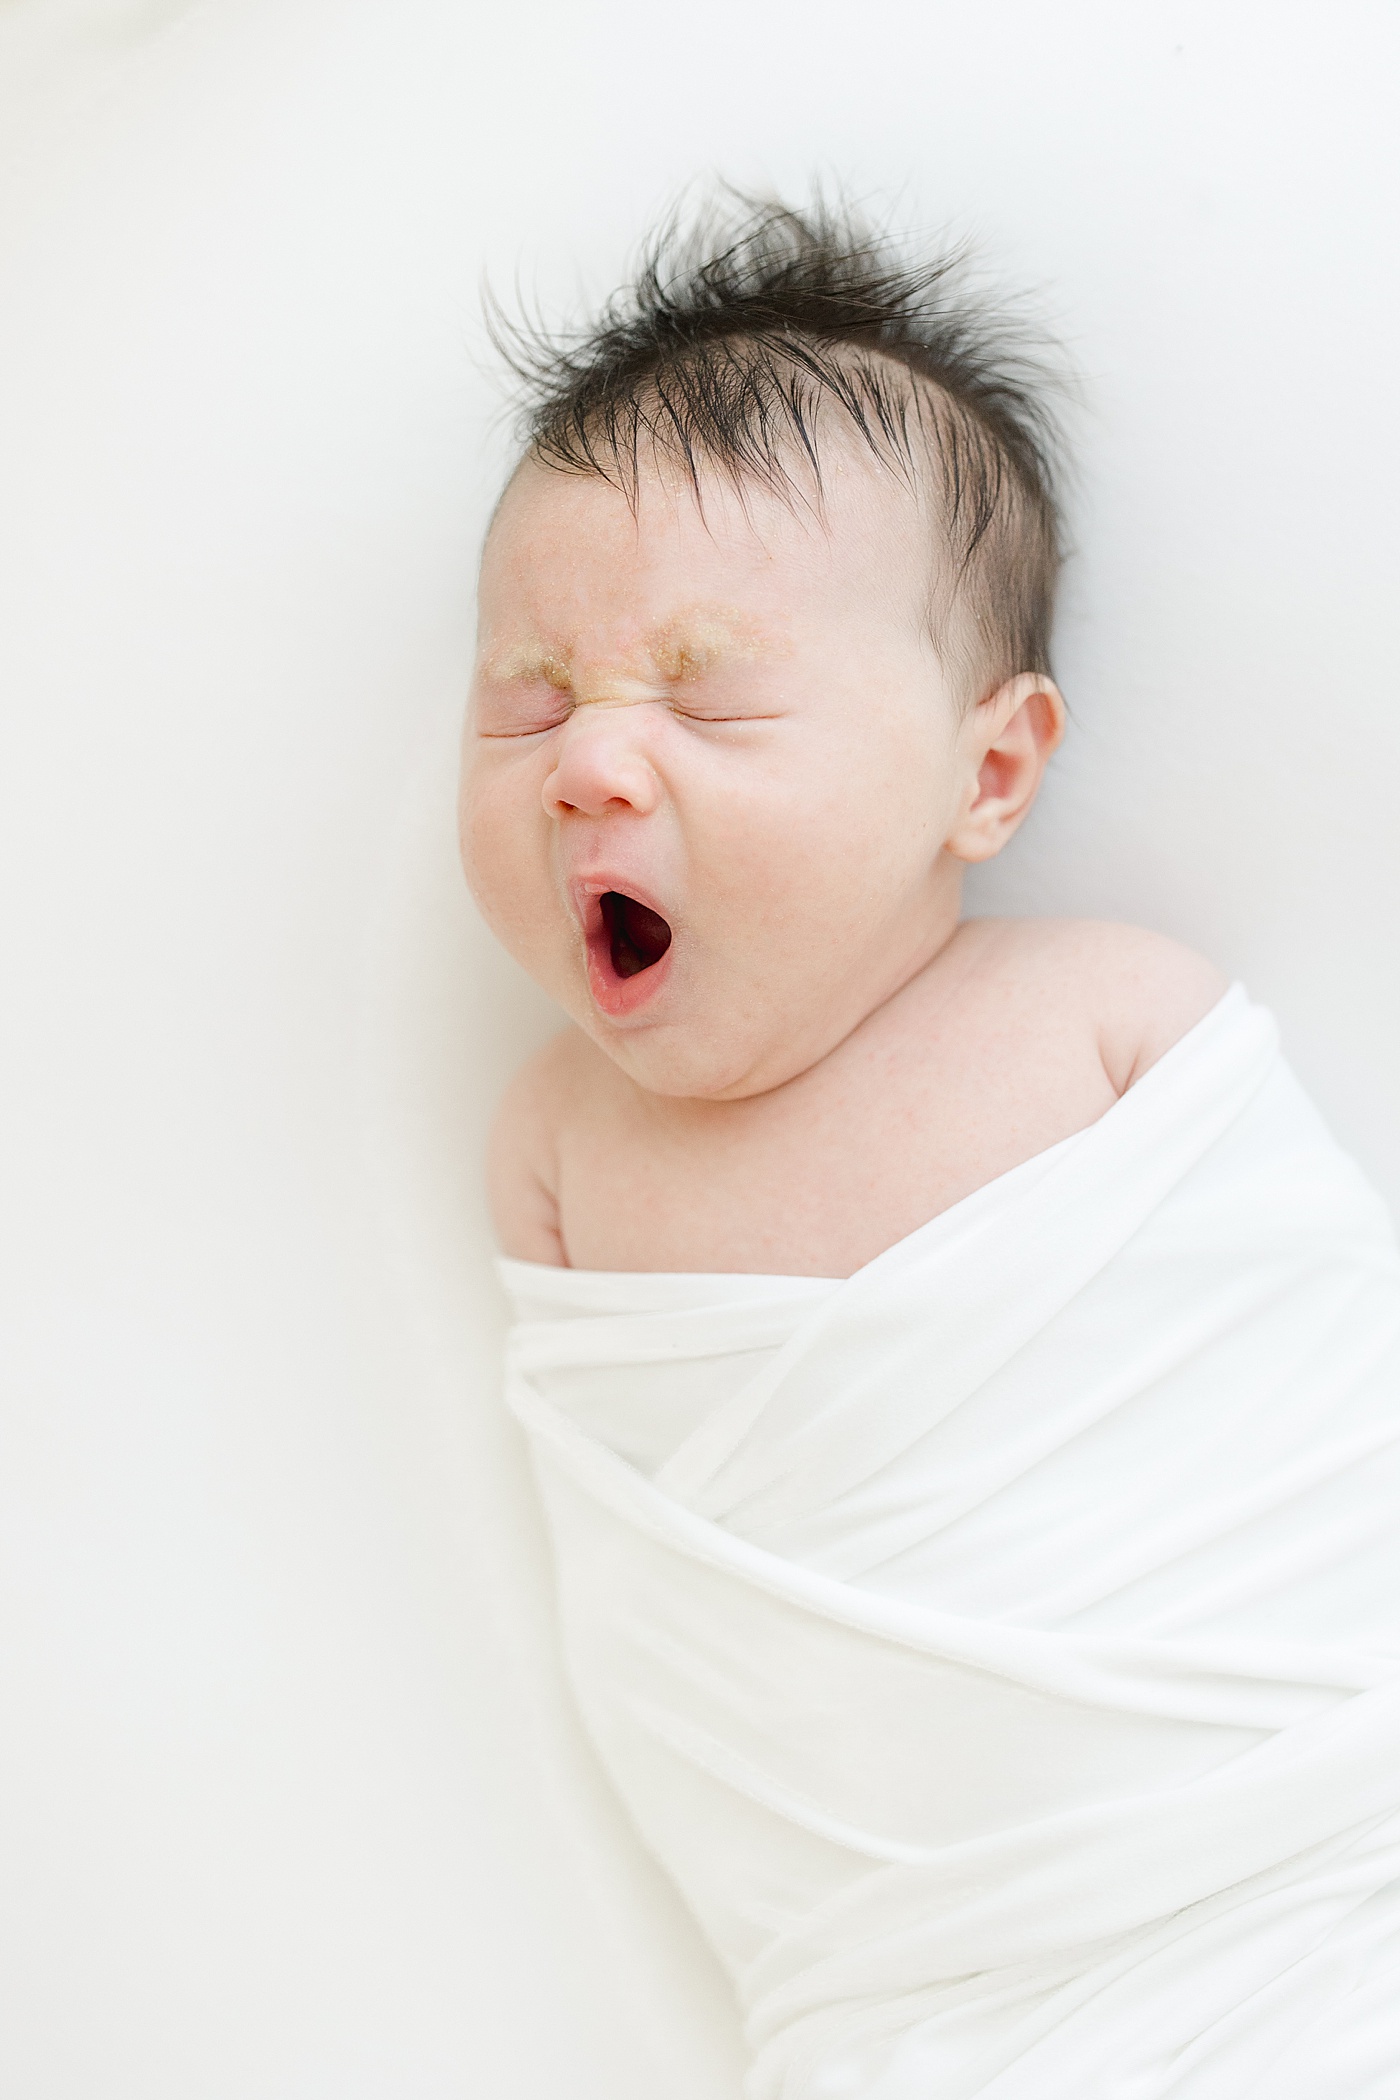 Newborn baby boy yawning during photoshoot with Kristin Wood Photography.